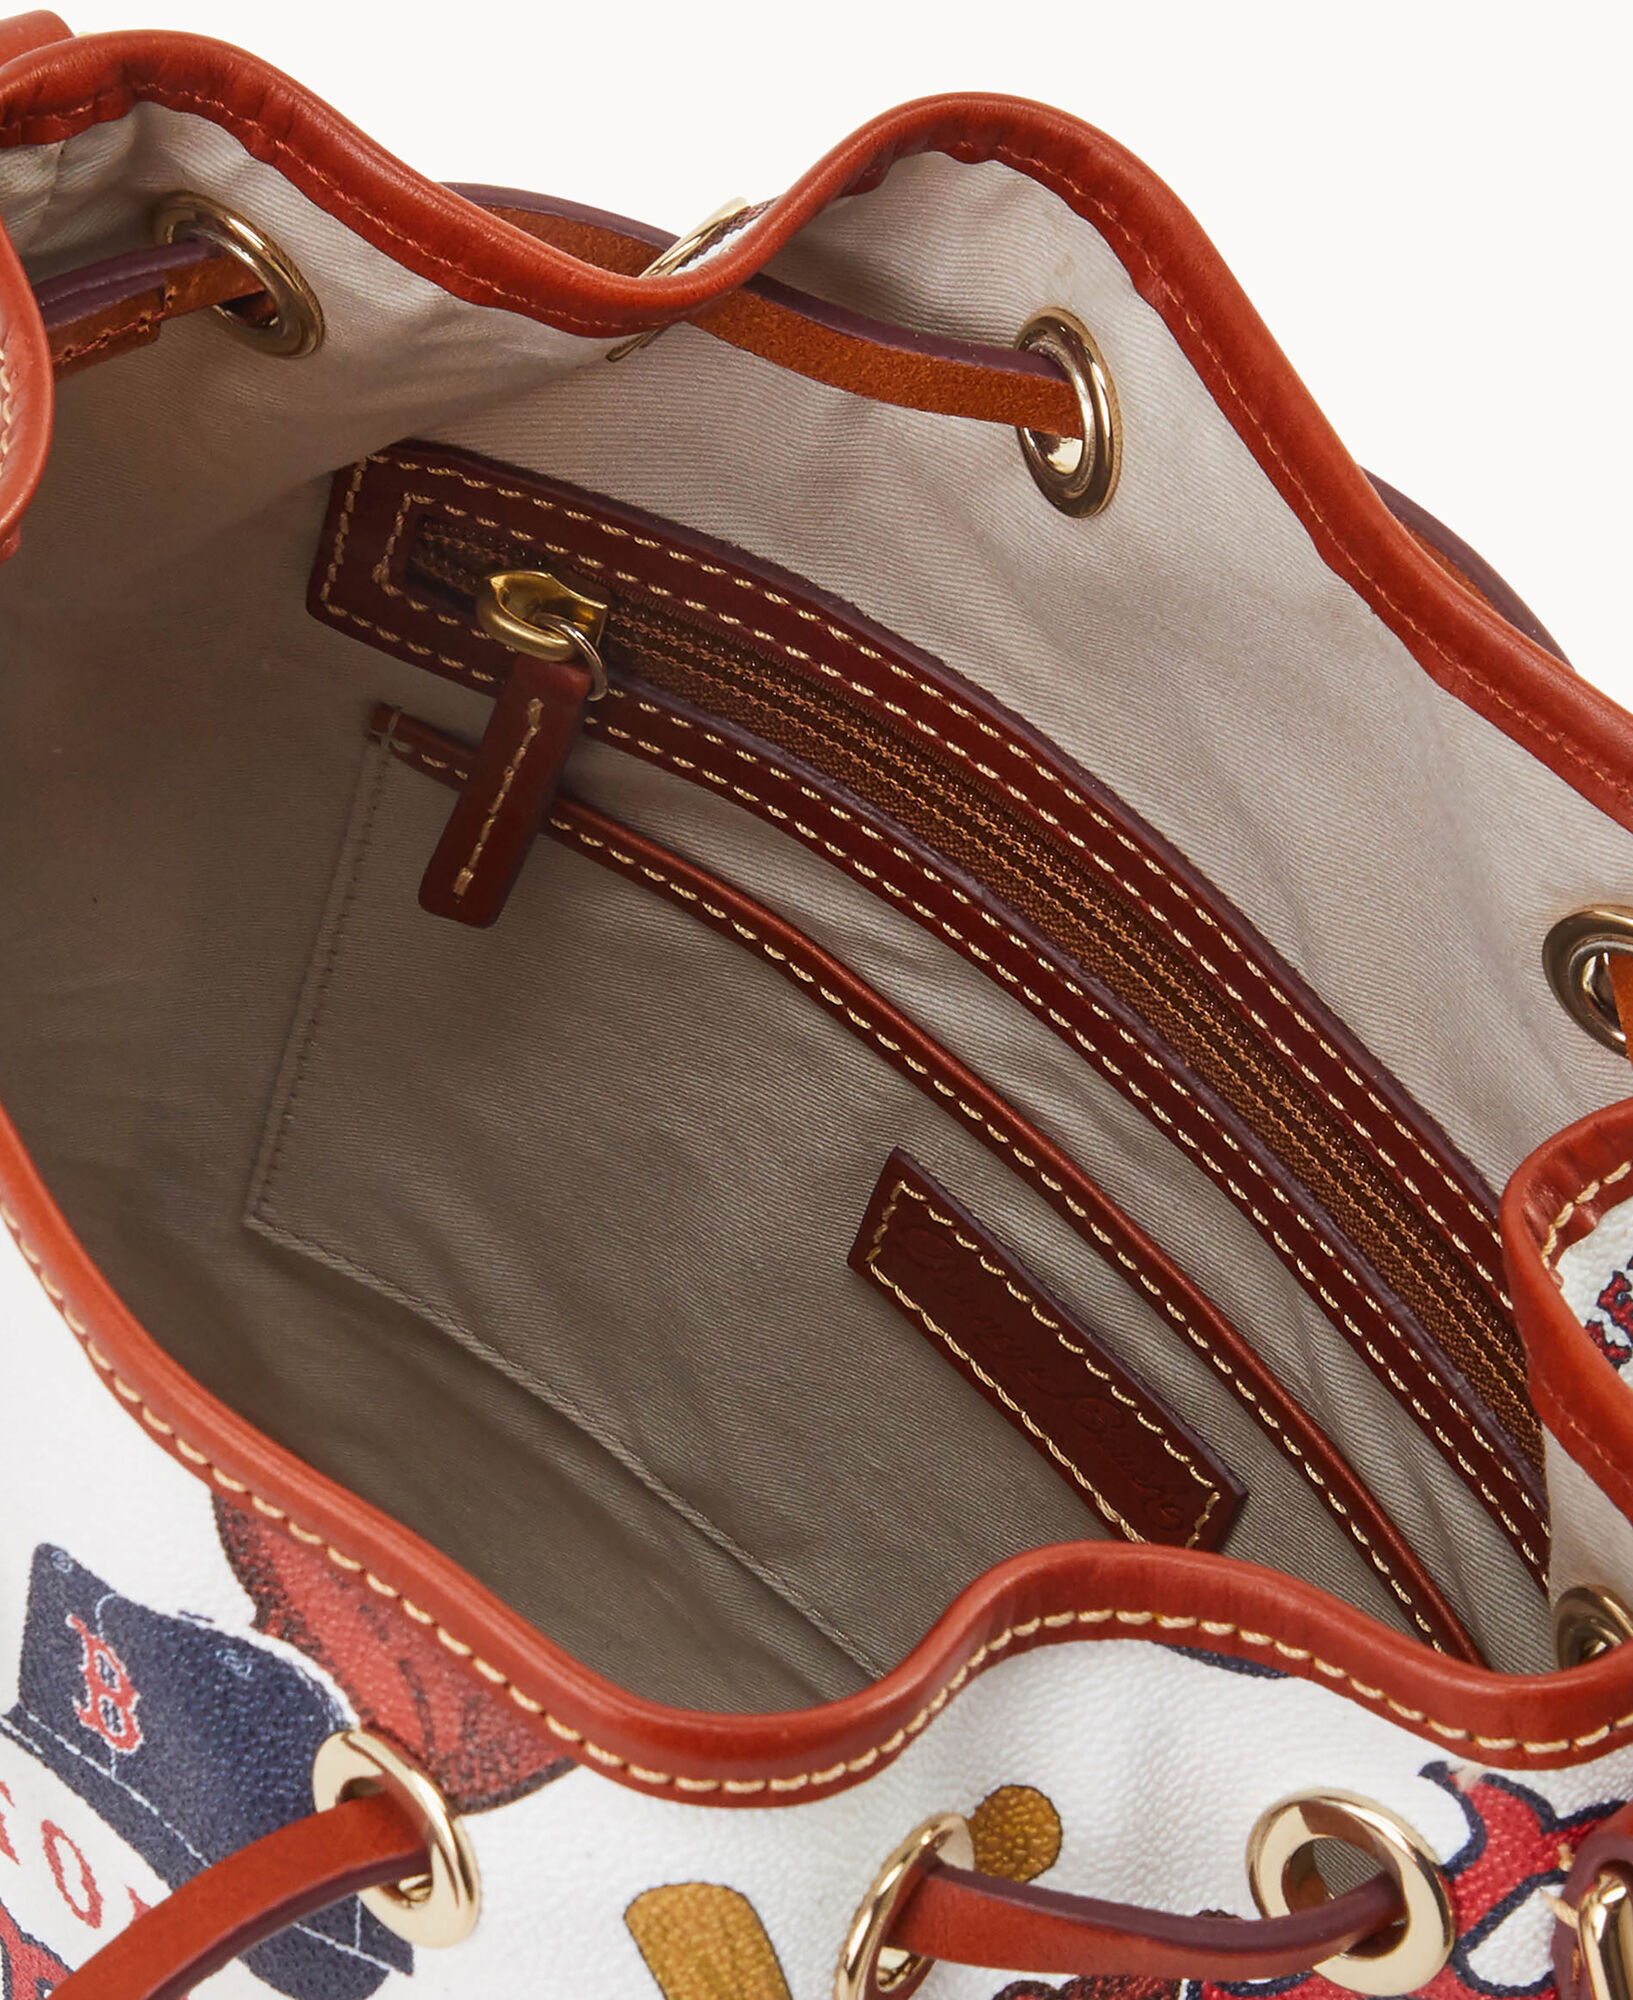 Dooney & Bourke MLB Boston Red Sox Drawstring Shoulder Bag